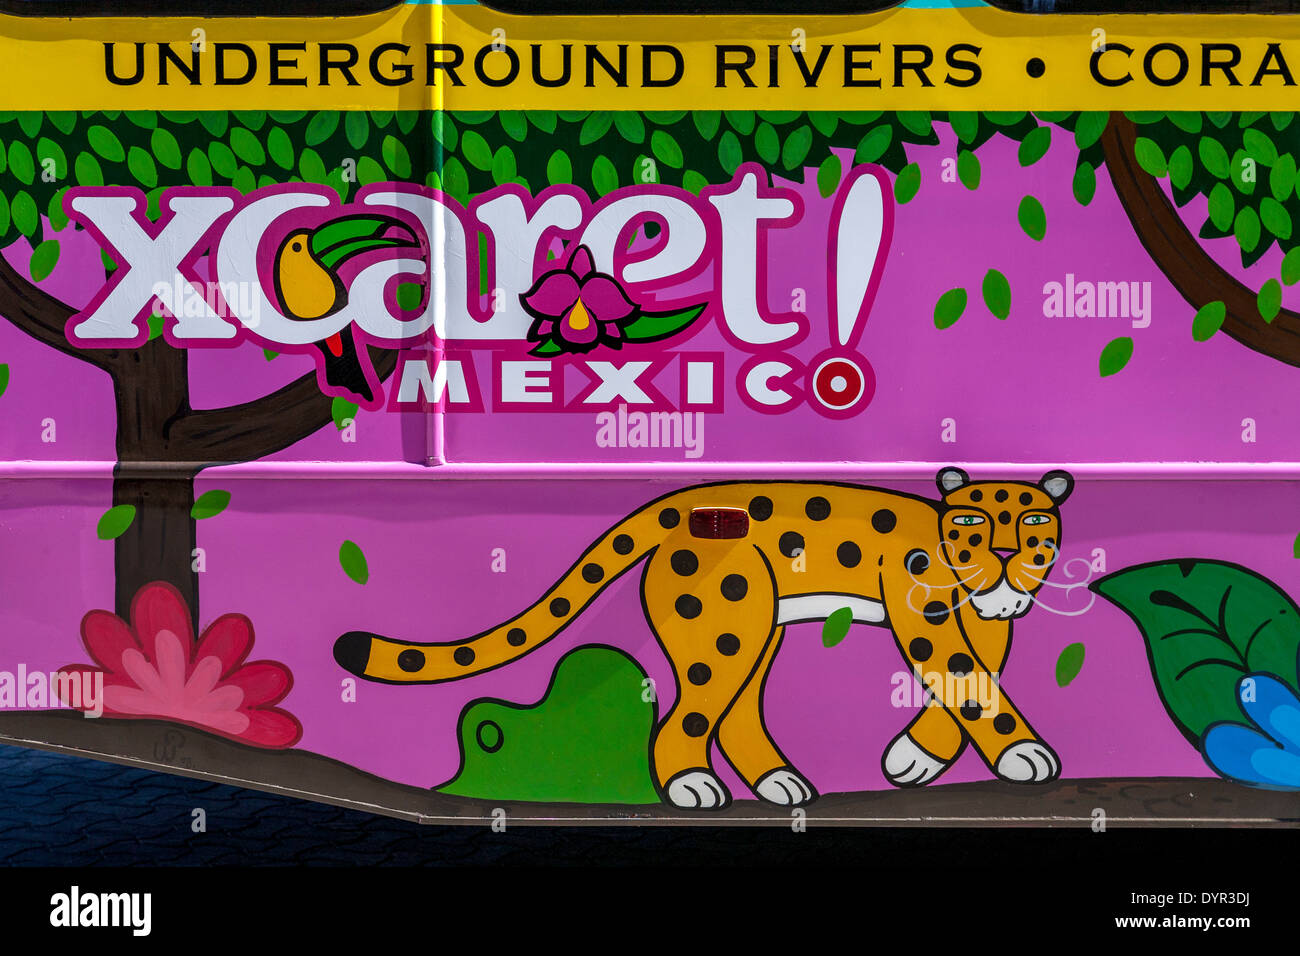 Xcaret Eco-Archaeological Park Tour Bus, Quintana Roo, Mexico Stock Photo